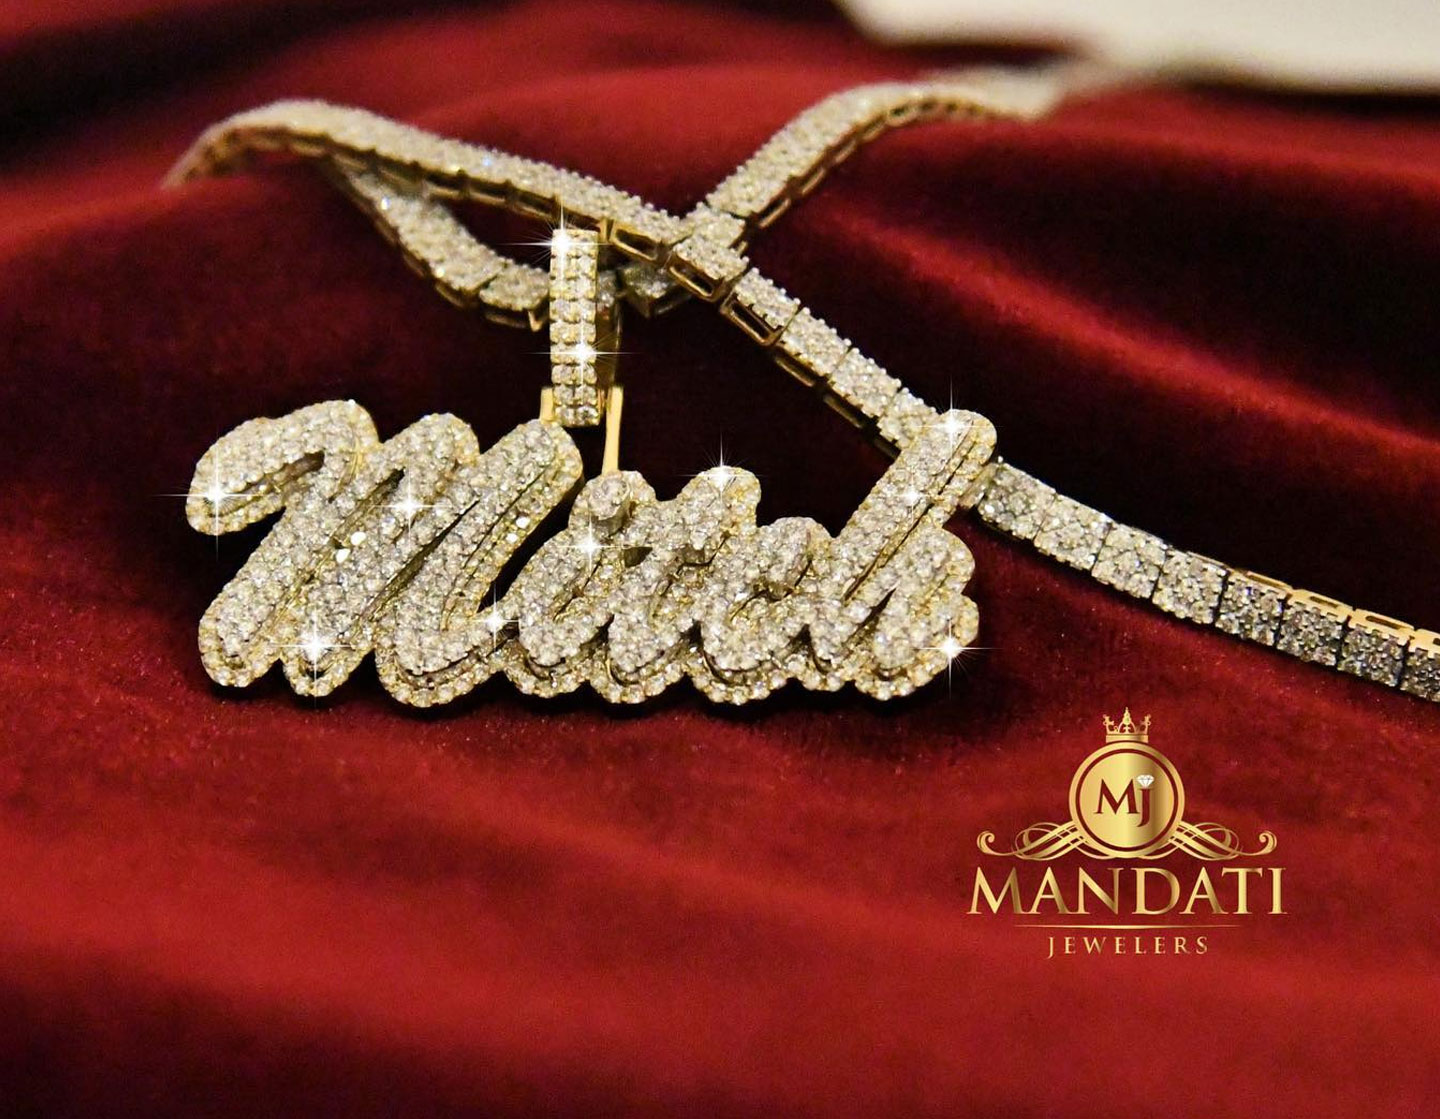 Mandati's Product Image